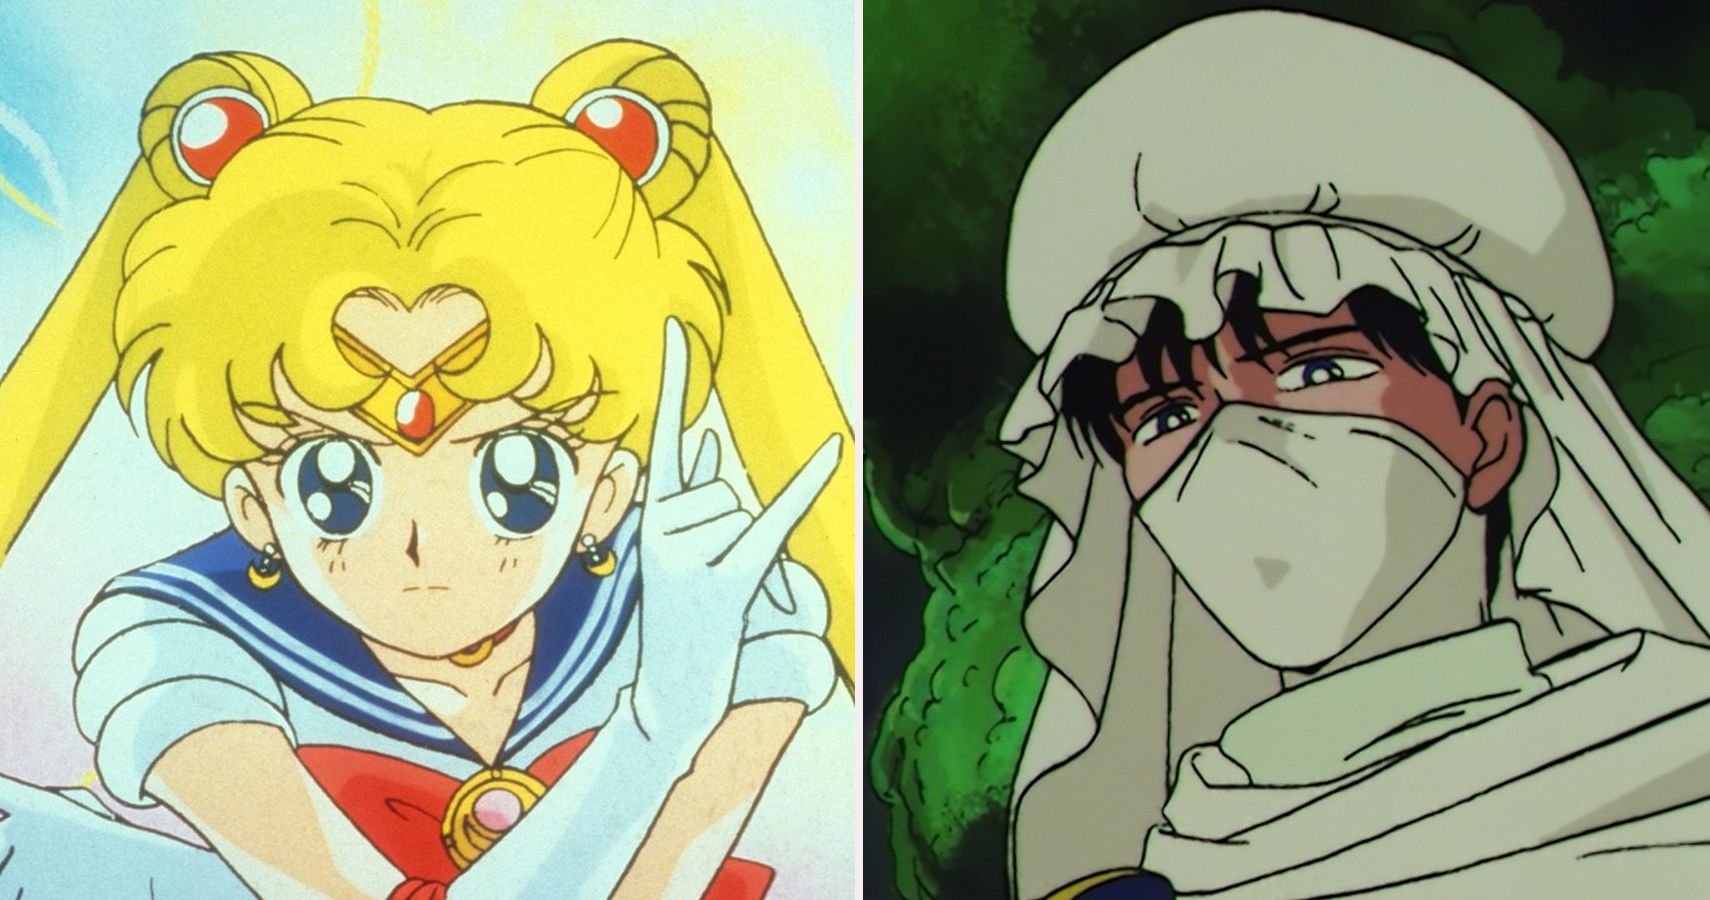 Best Episodes Of Sailor Moon According To IMDb